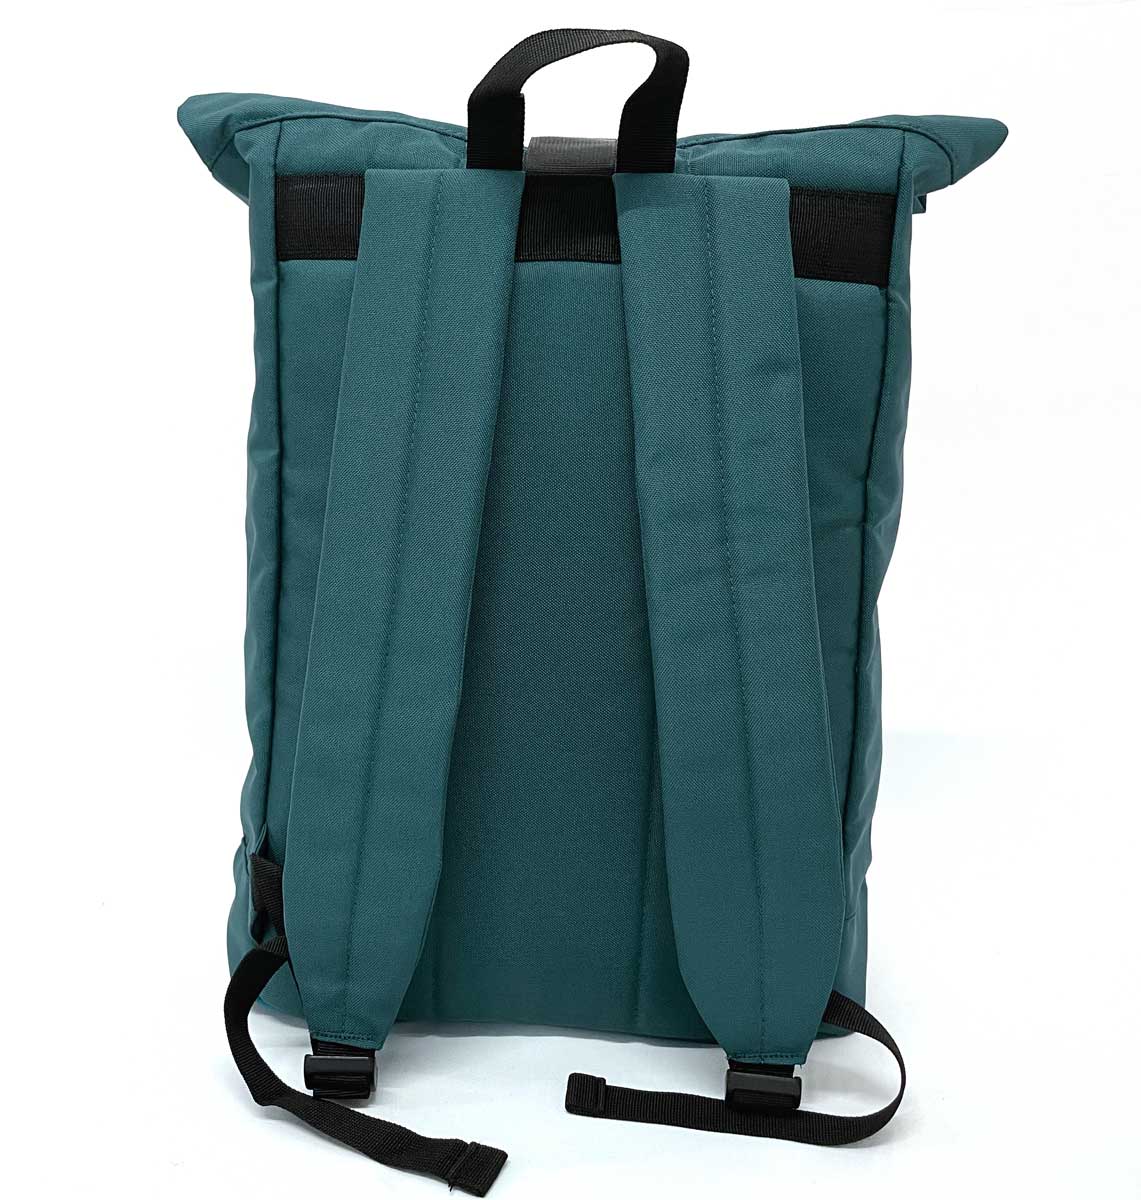 Orangutan Beach Roll-top Recycled Backpack - Blue Panda